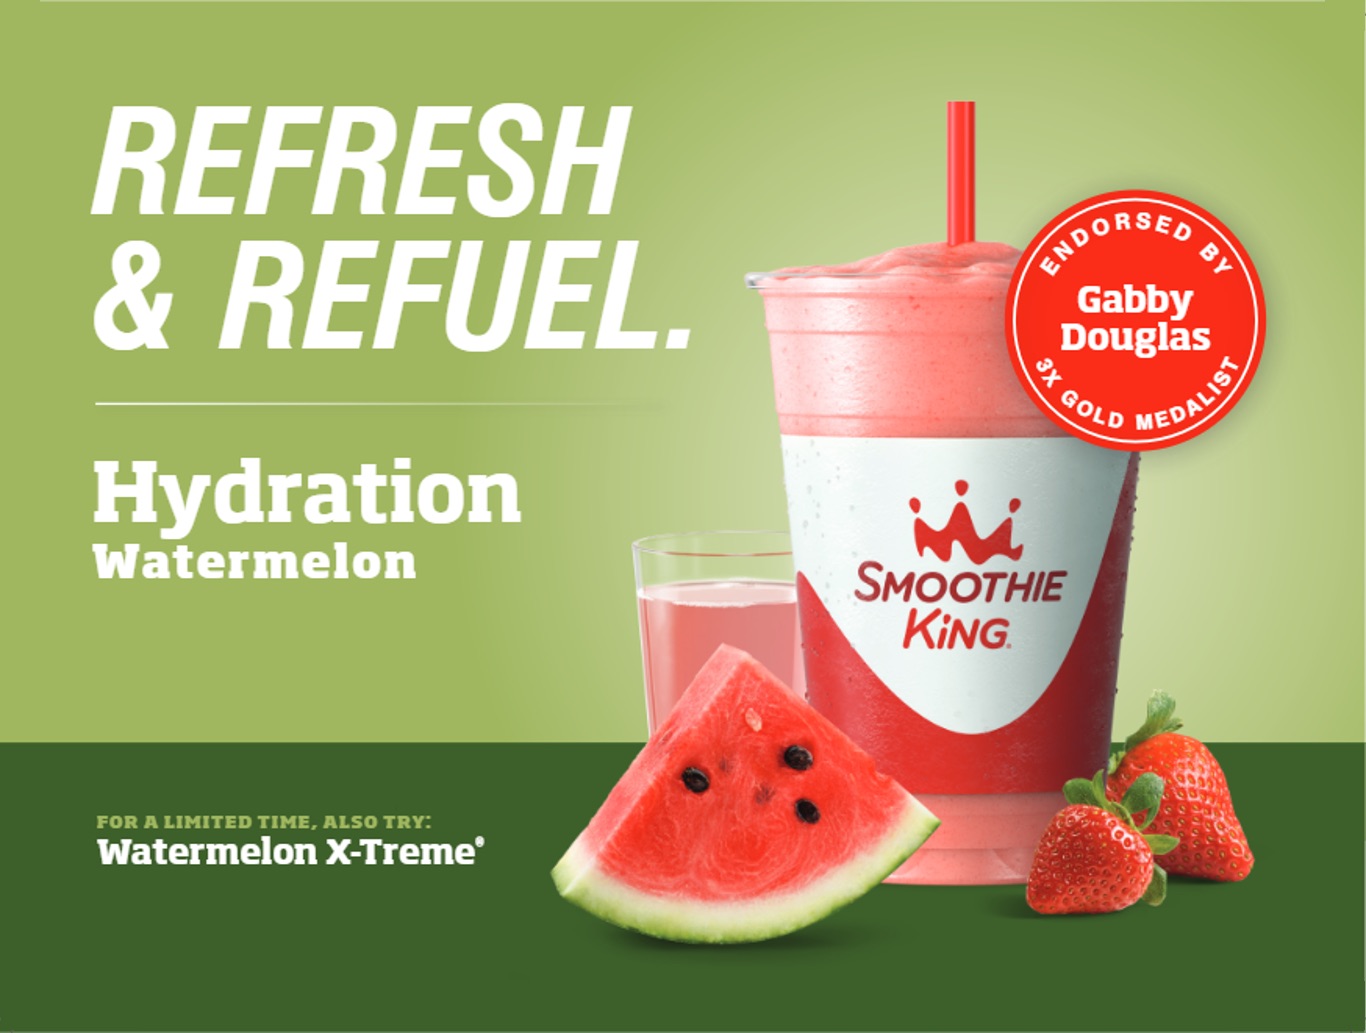 FREE 12 oz Hydration Watermelon or Watermelon X-Treme